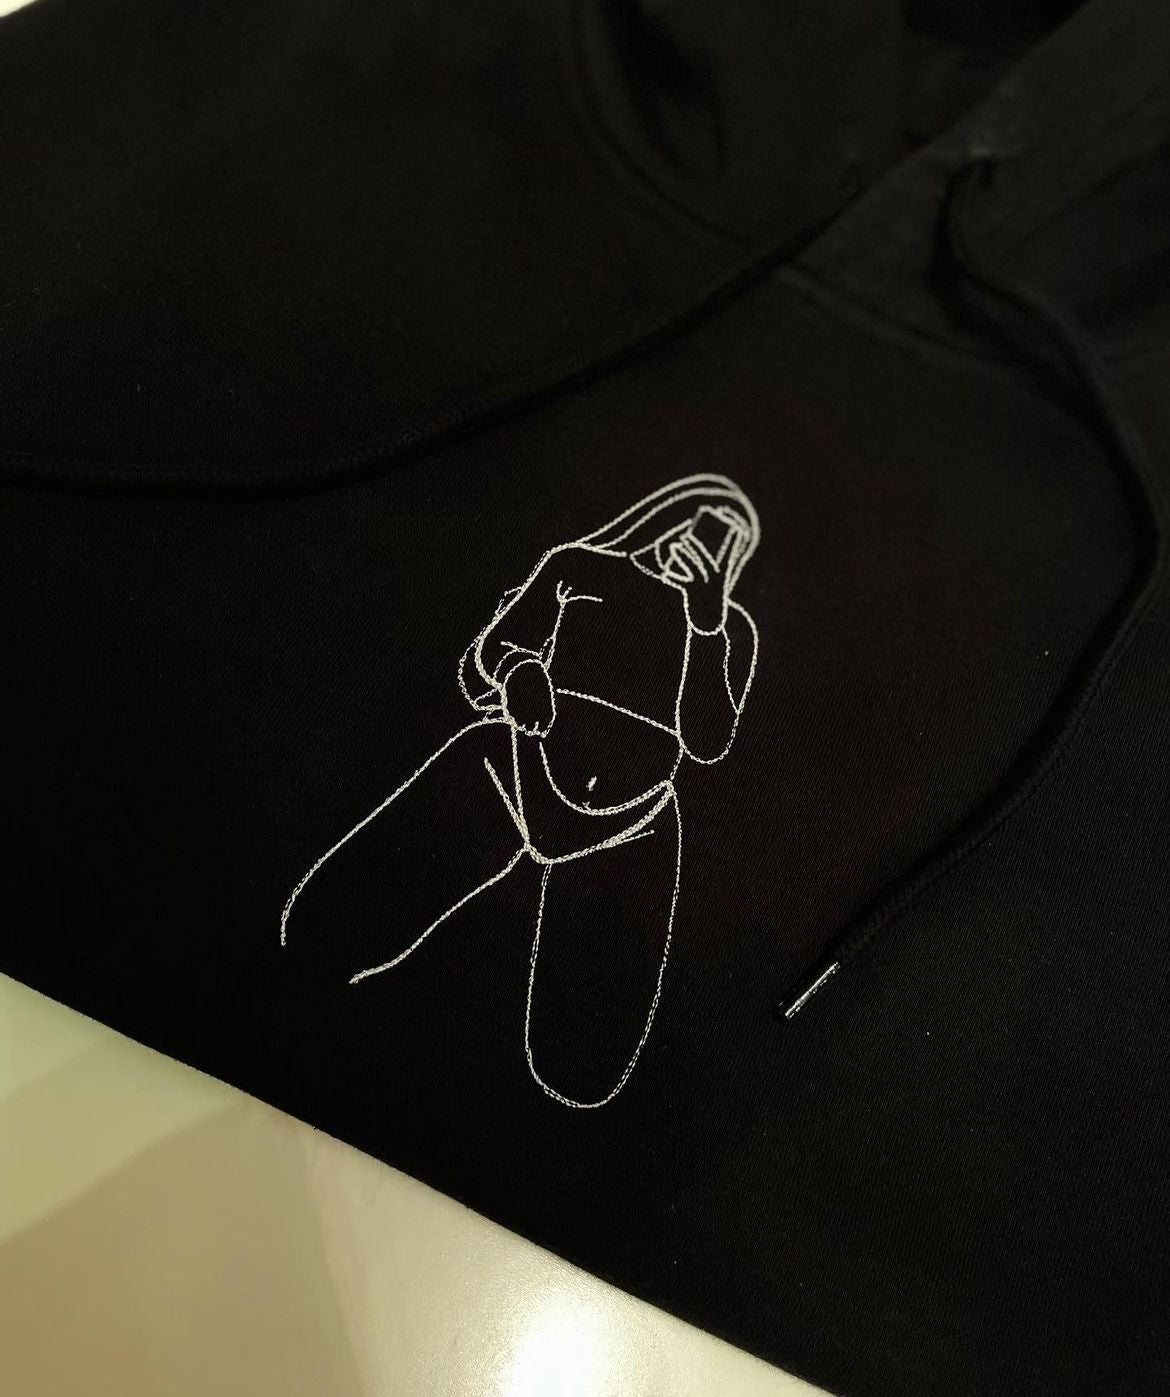 Line art with personal photo sweatshirt / hoodie